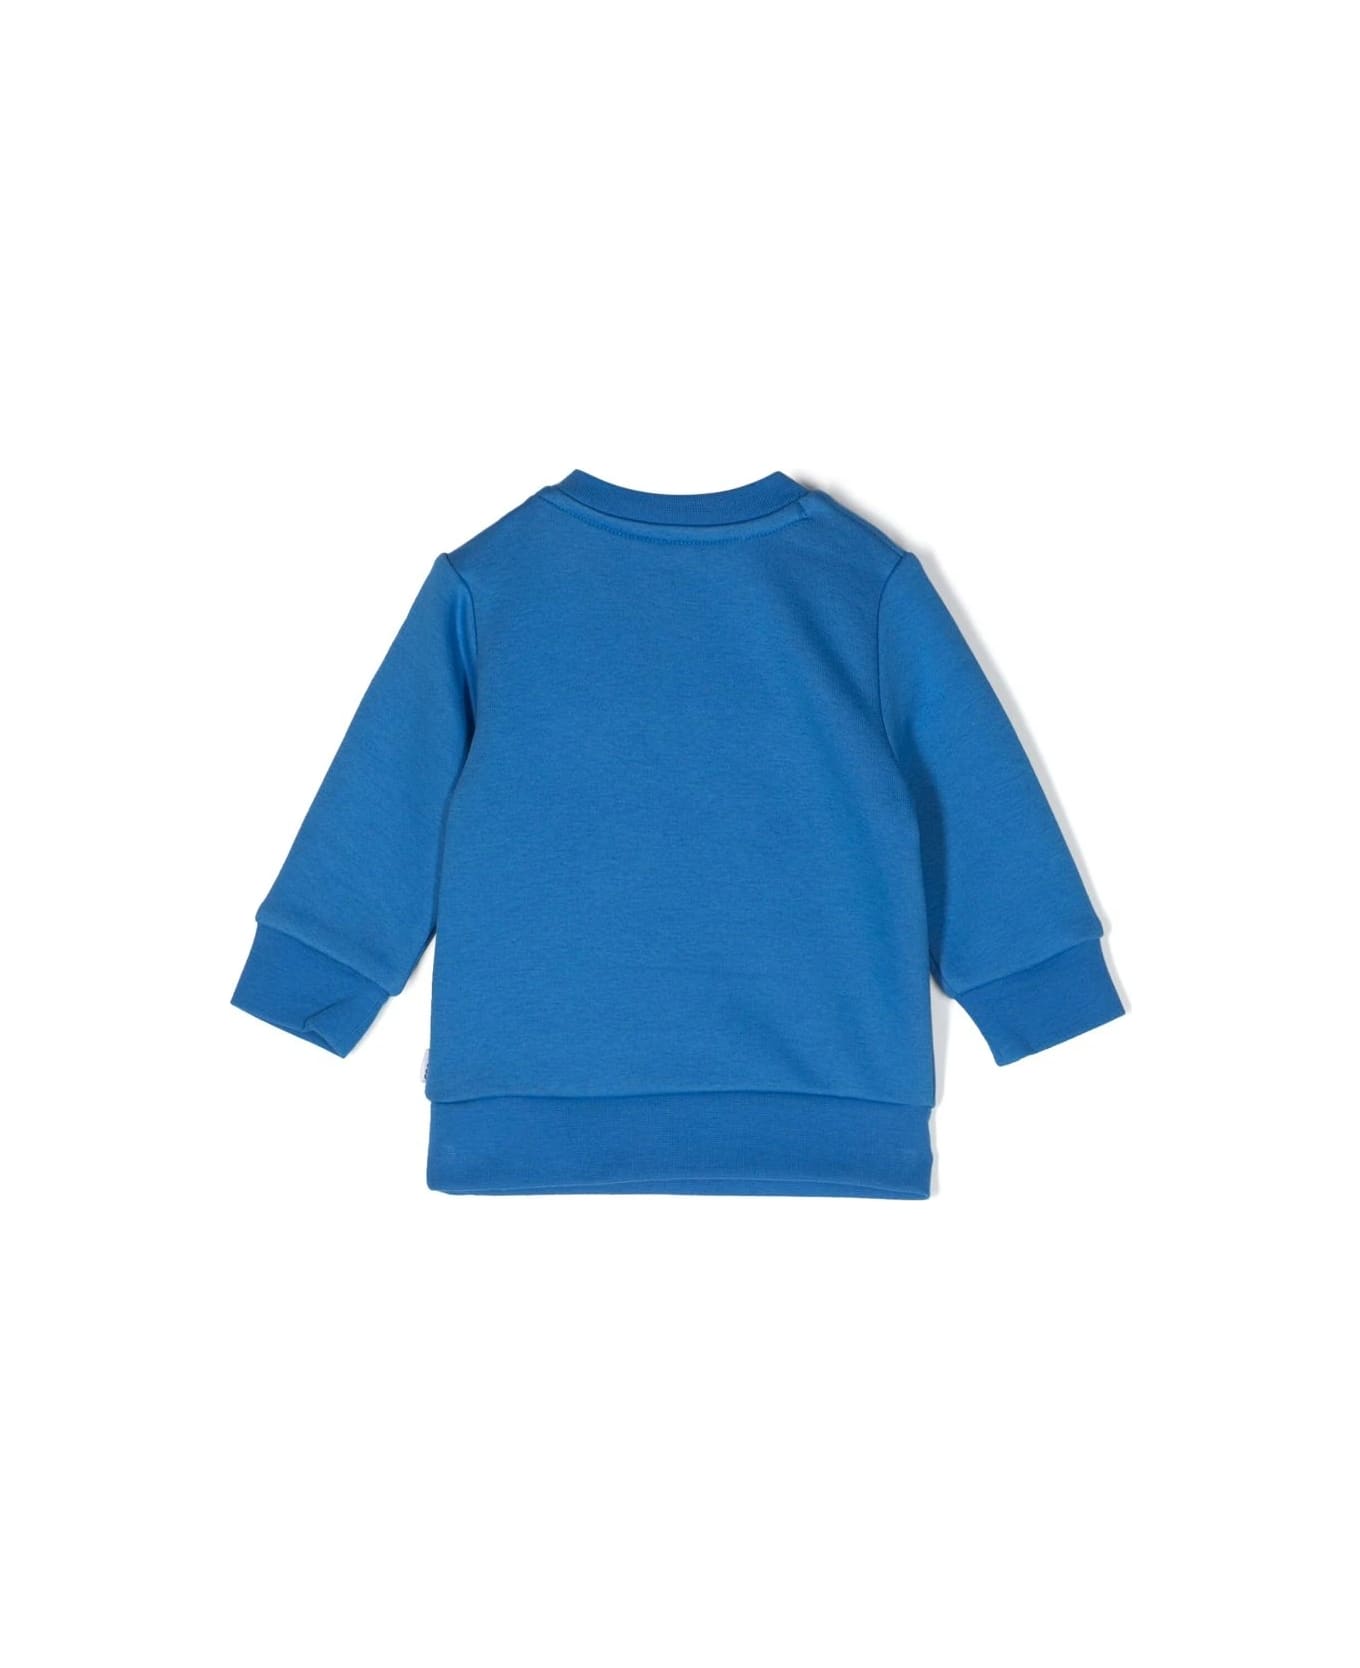 Hugo Boss Sweatshirt With Print - Blue